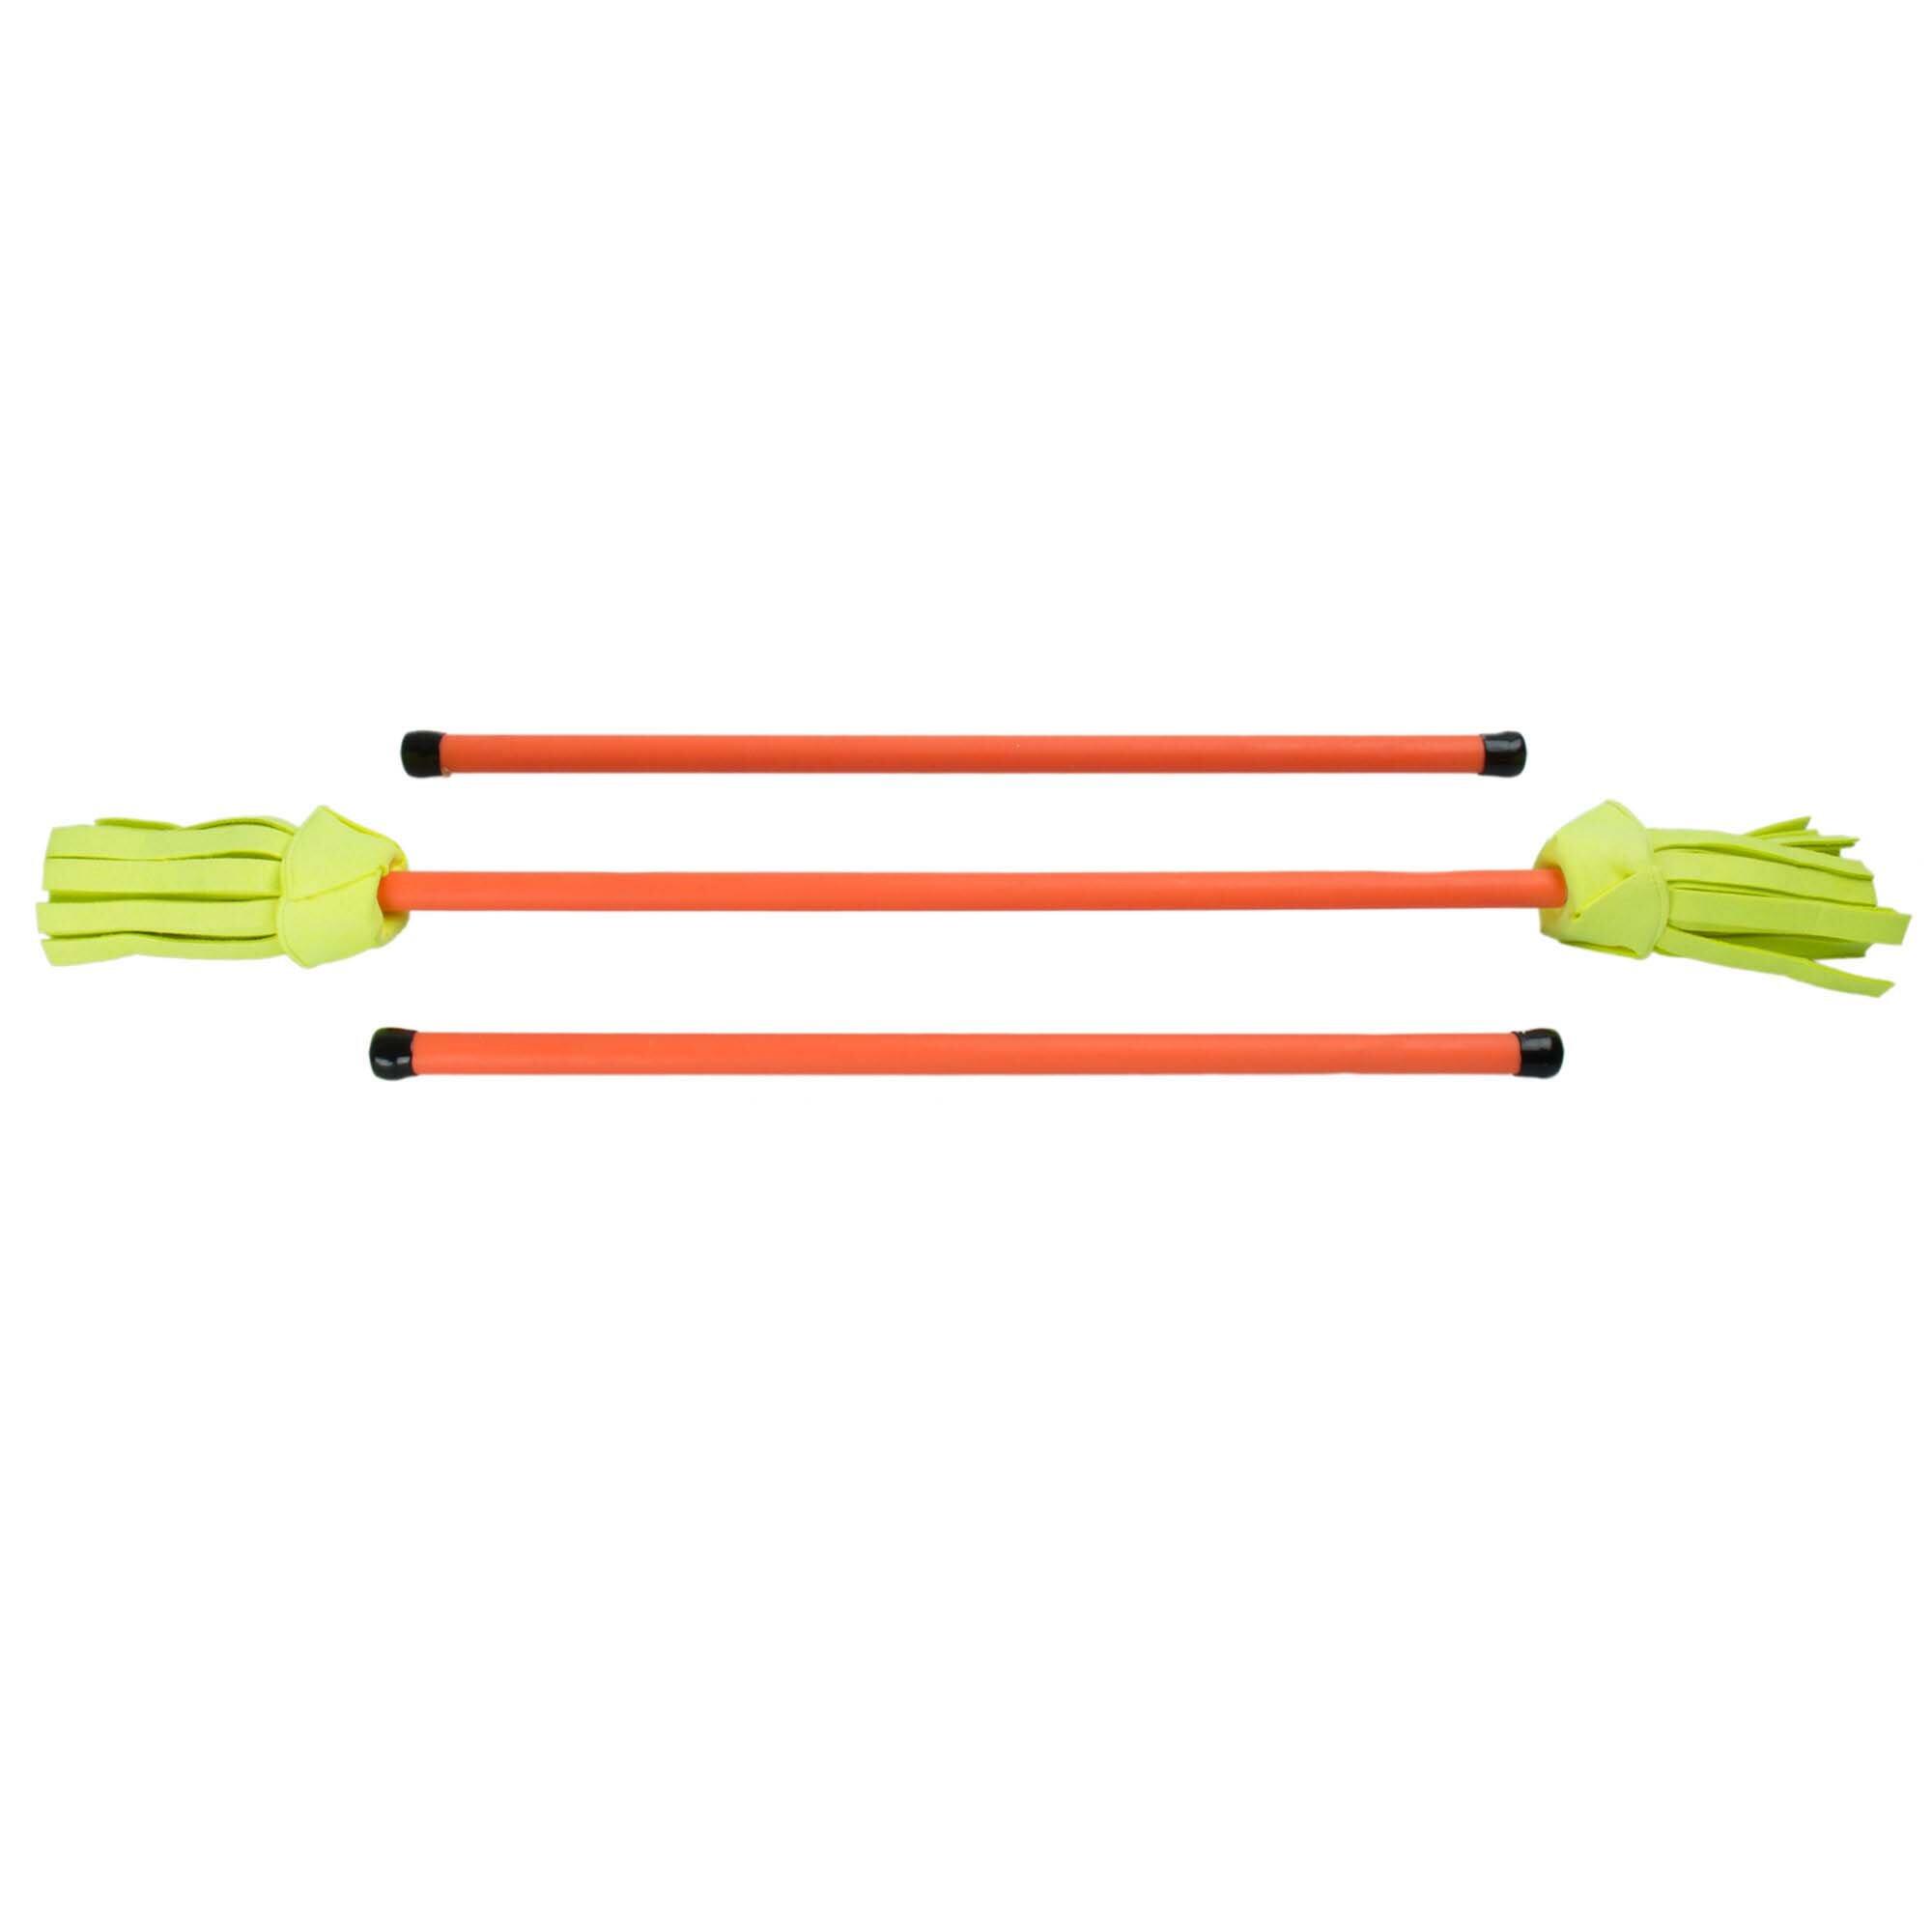 Neo Fluoro Flower Stick and Hand Sticks-Orange with Yellow Tassels 2/3